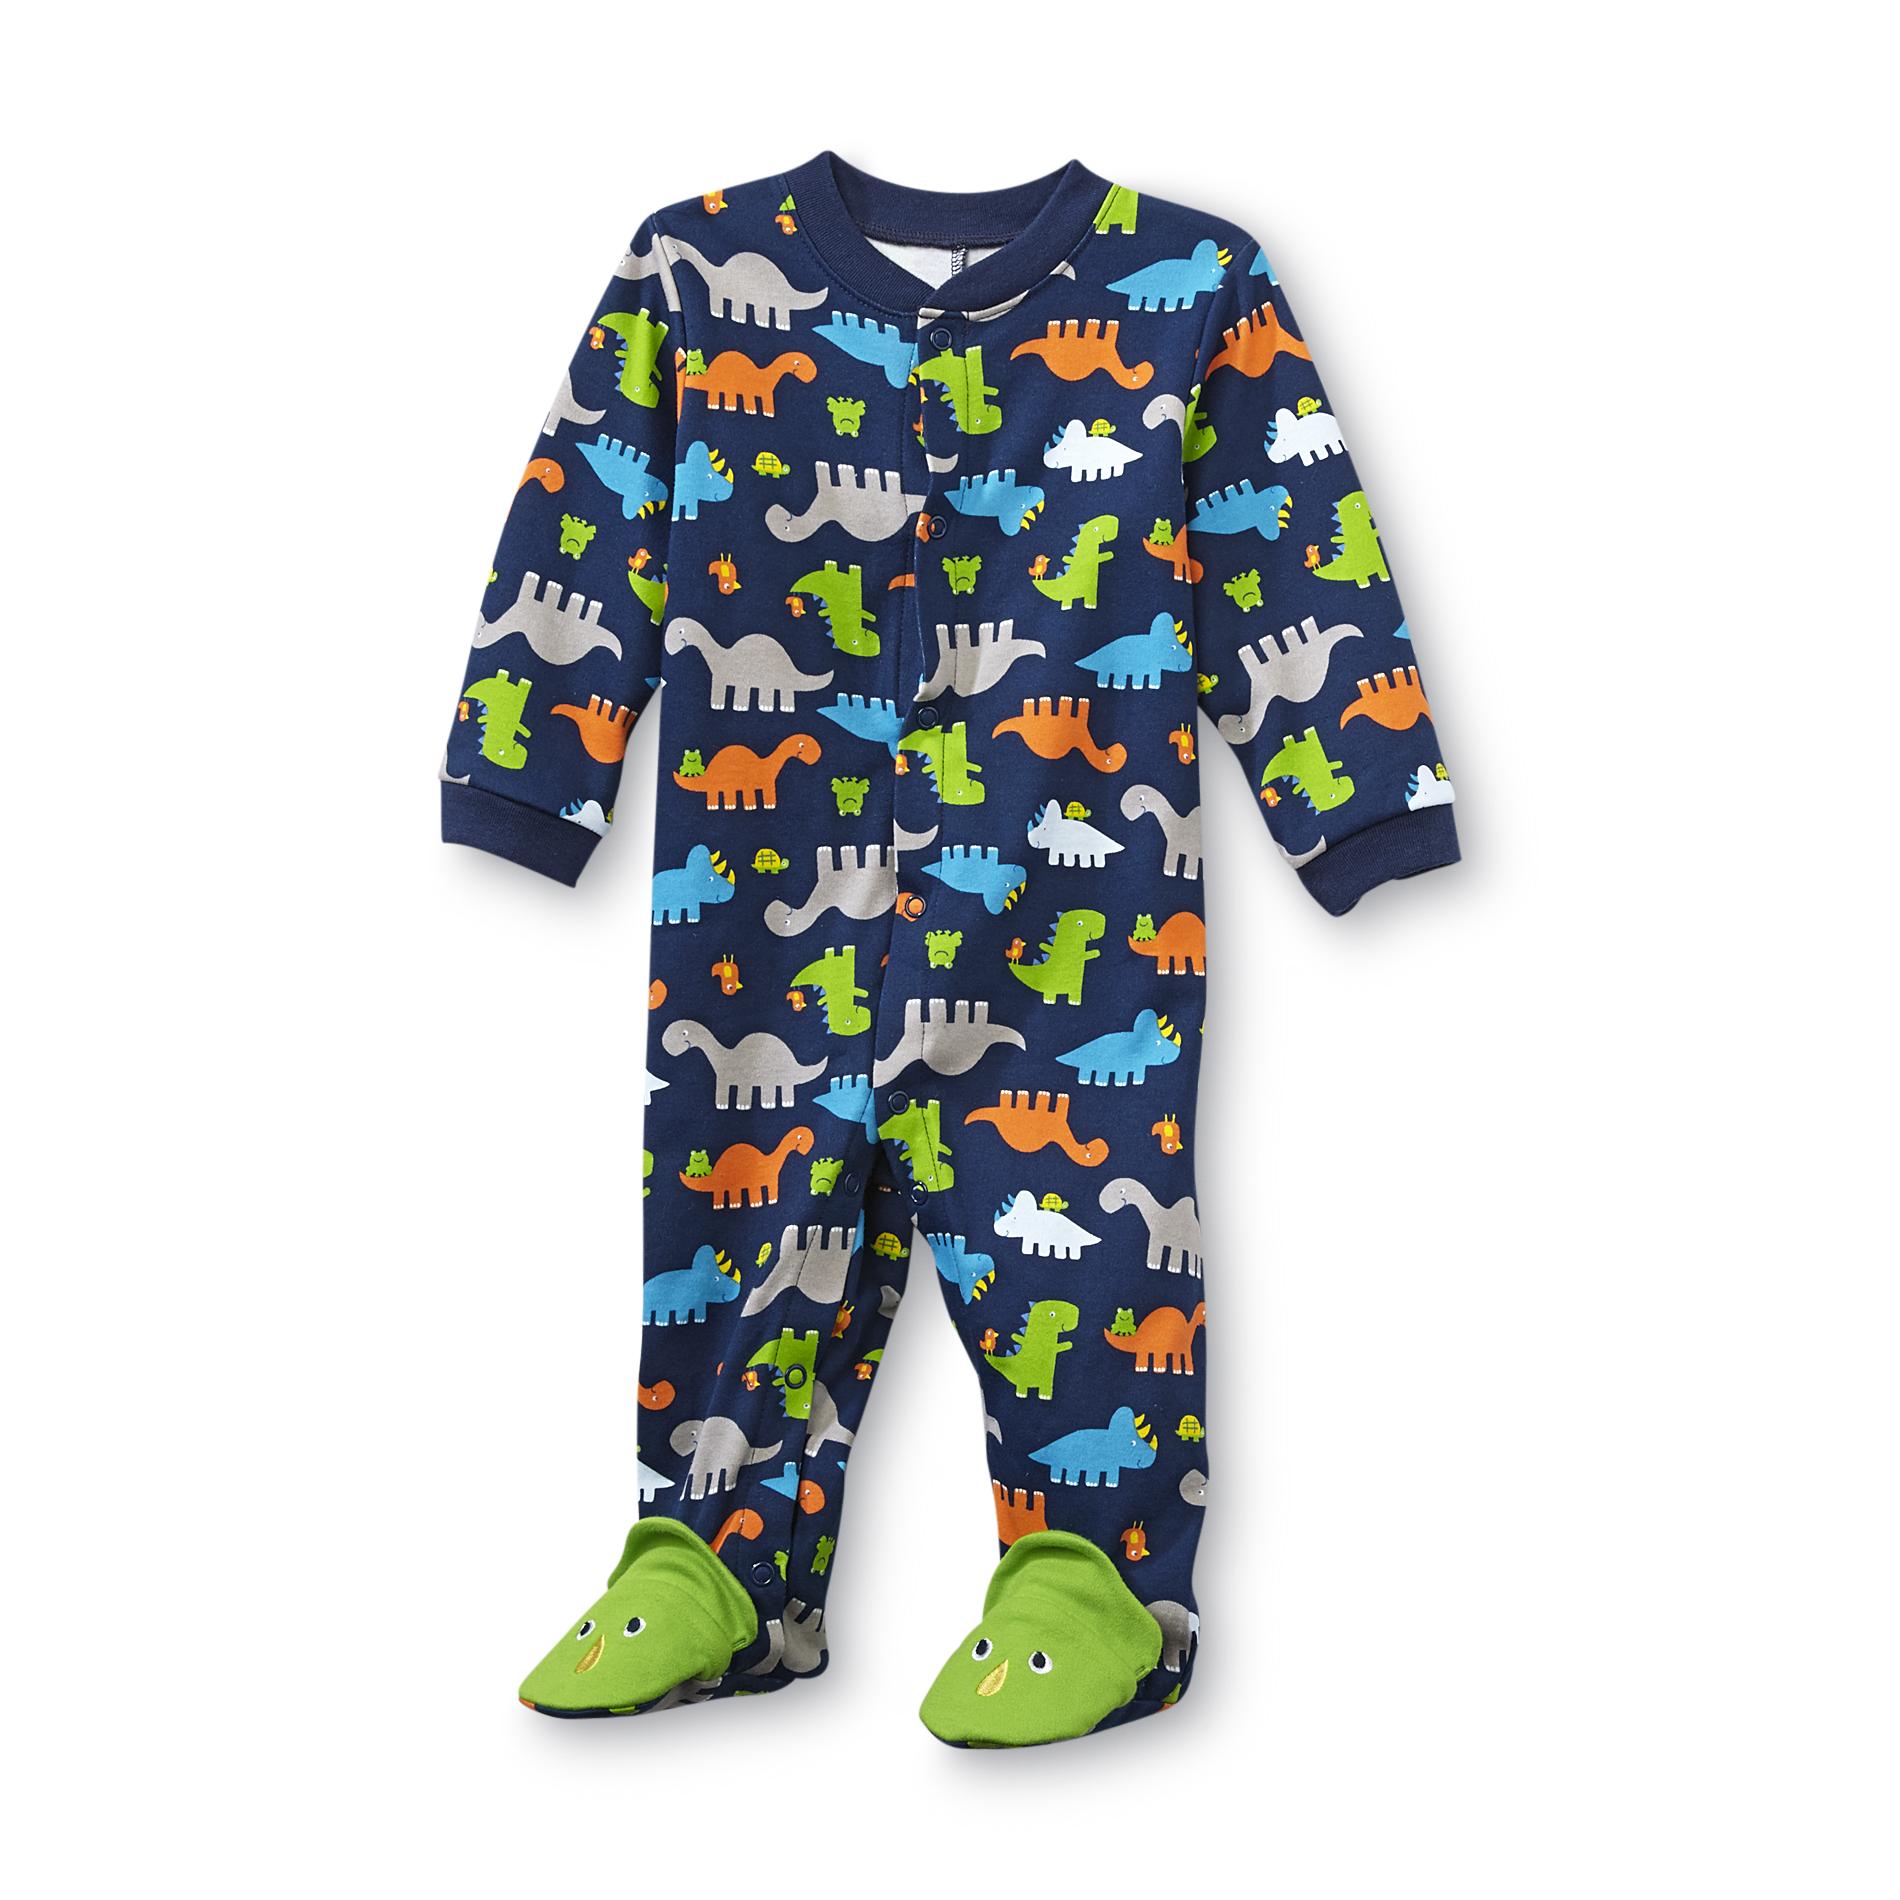 Little Wonders Newborn Boy's Footie Pajamas - Dinosaur